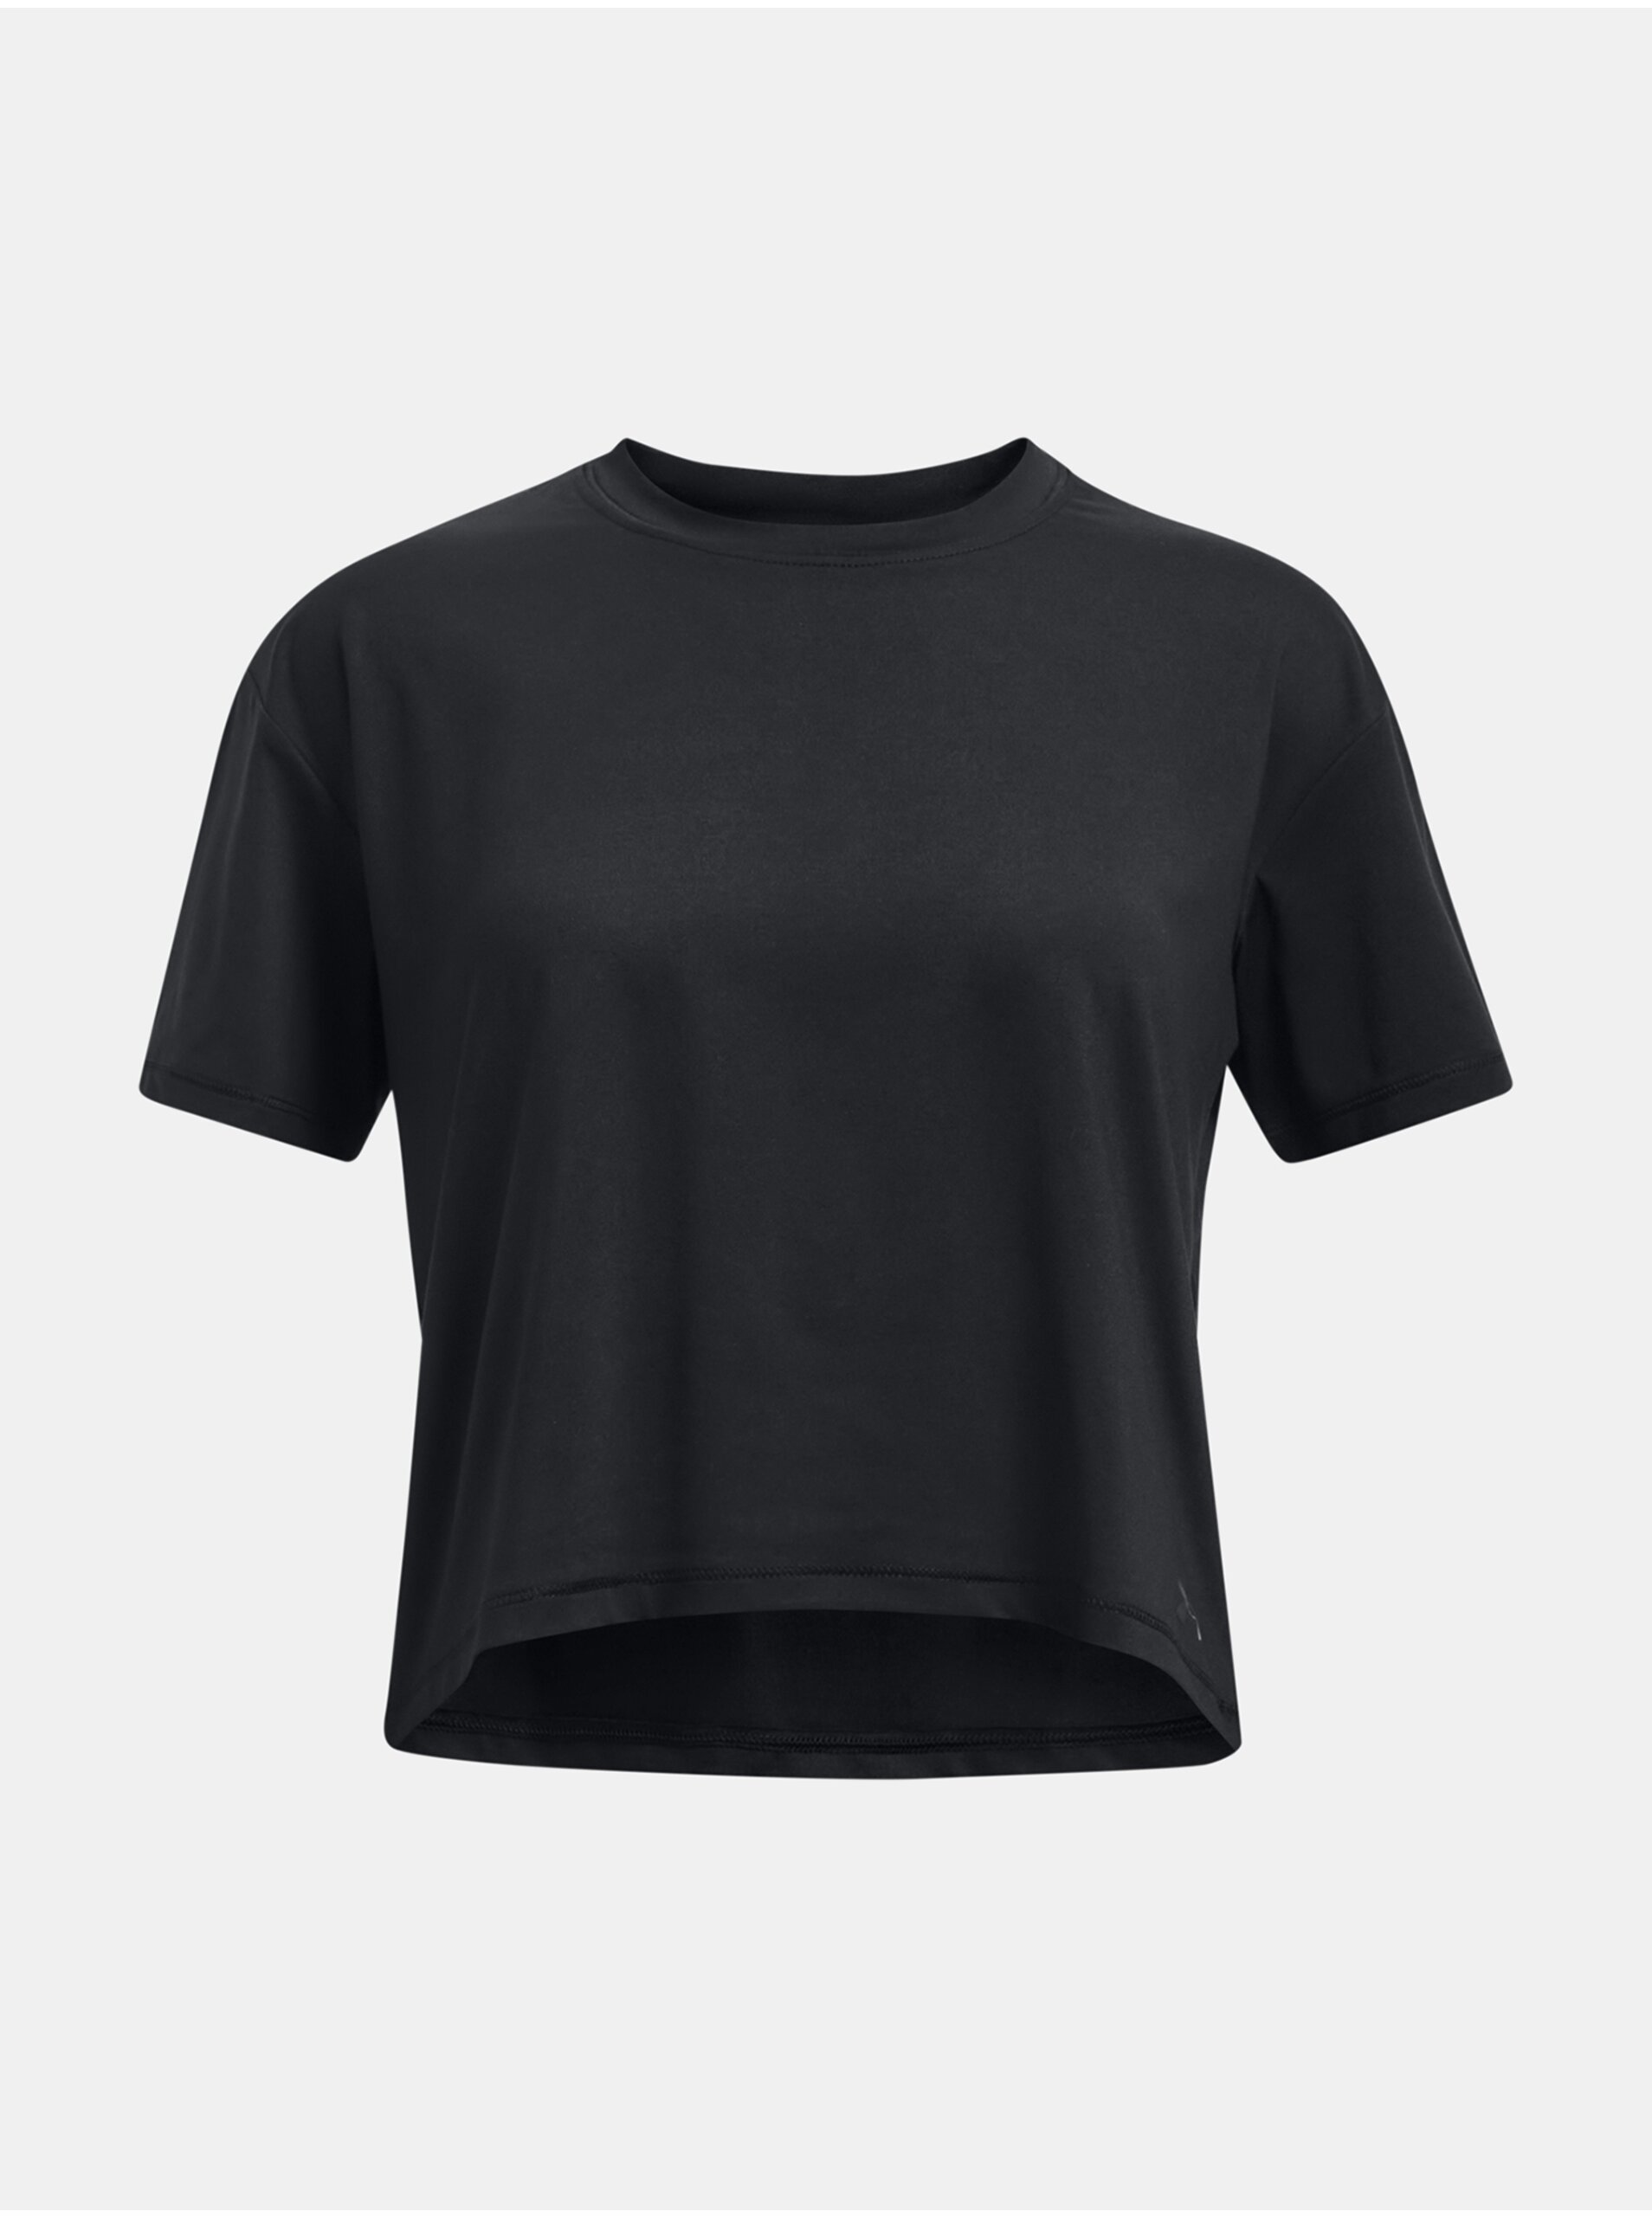 Lacno Čierne dievčenské športové tričko Under Armour Motion